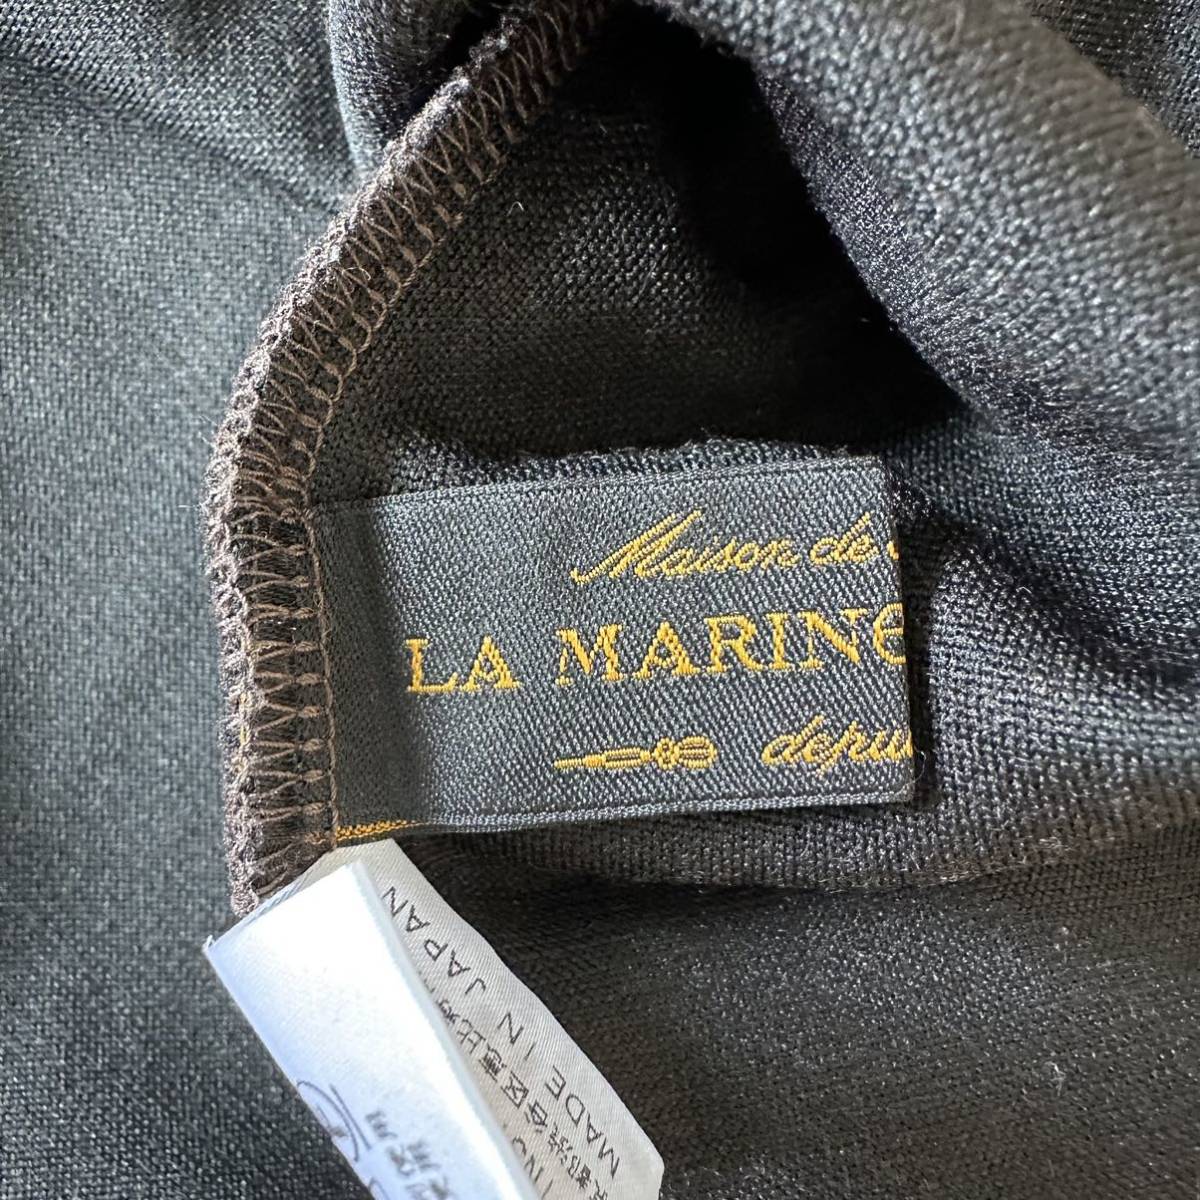  La Marine Francaise короткий cut and sewn свободный размер 